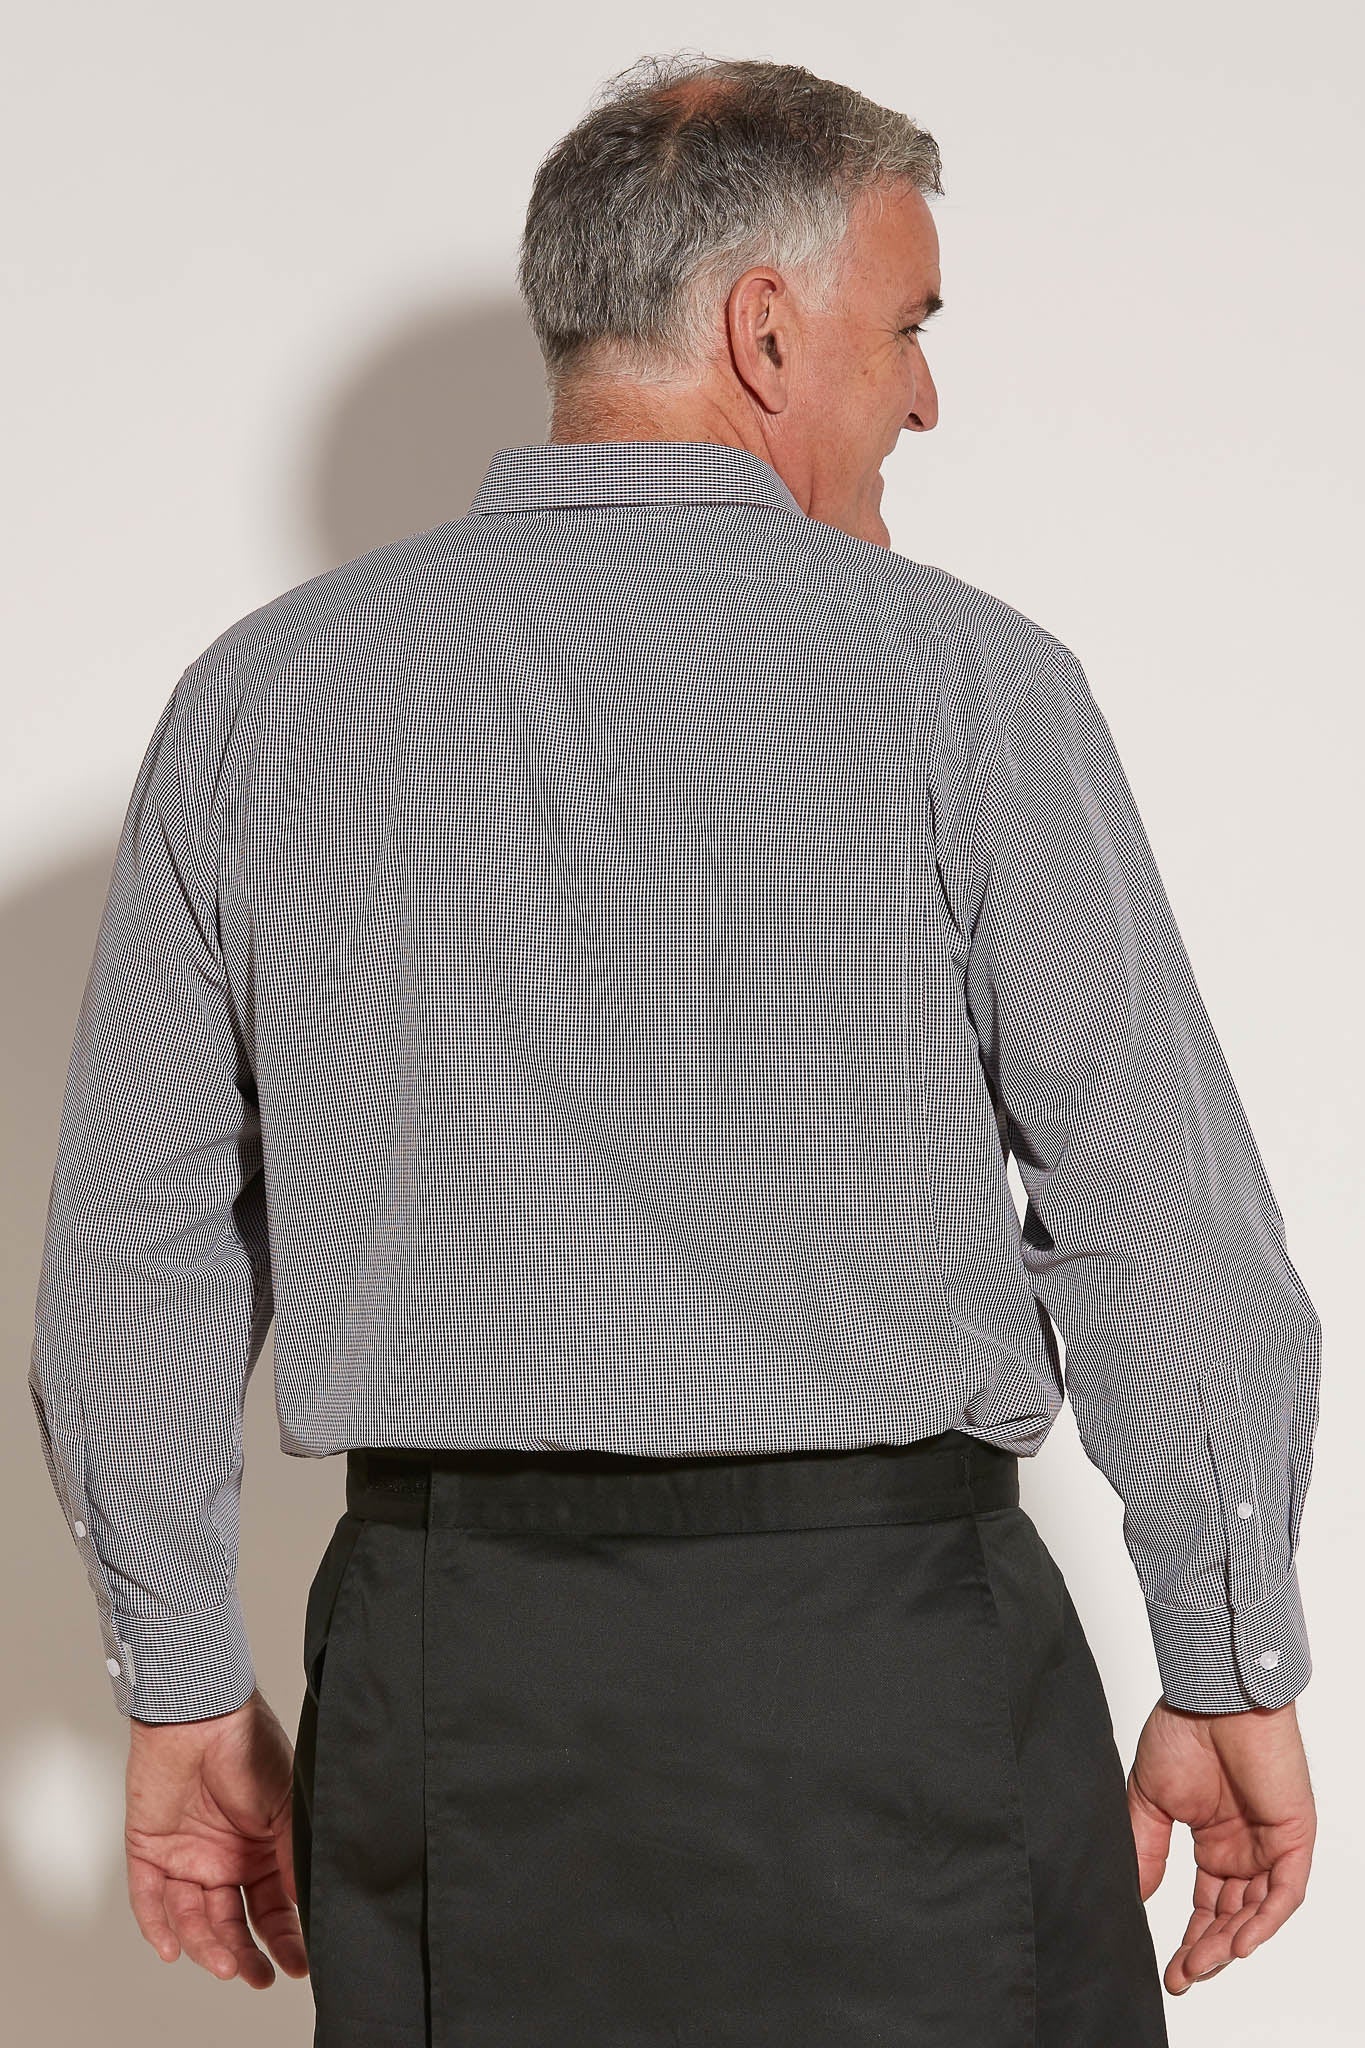 Adaptive Dress Shirt for Men | Art in Aging